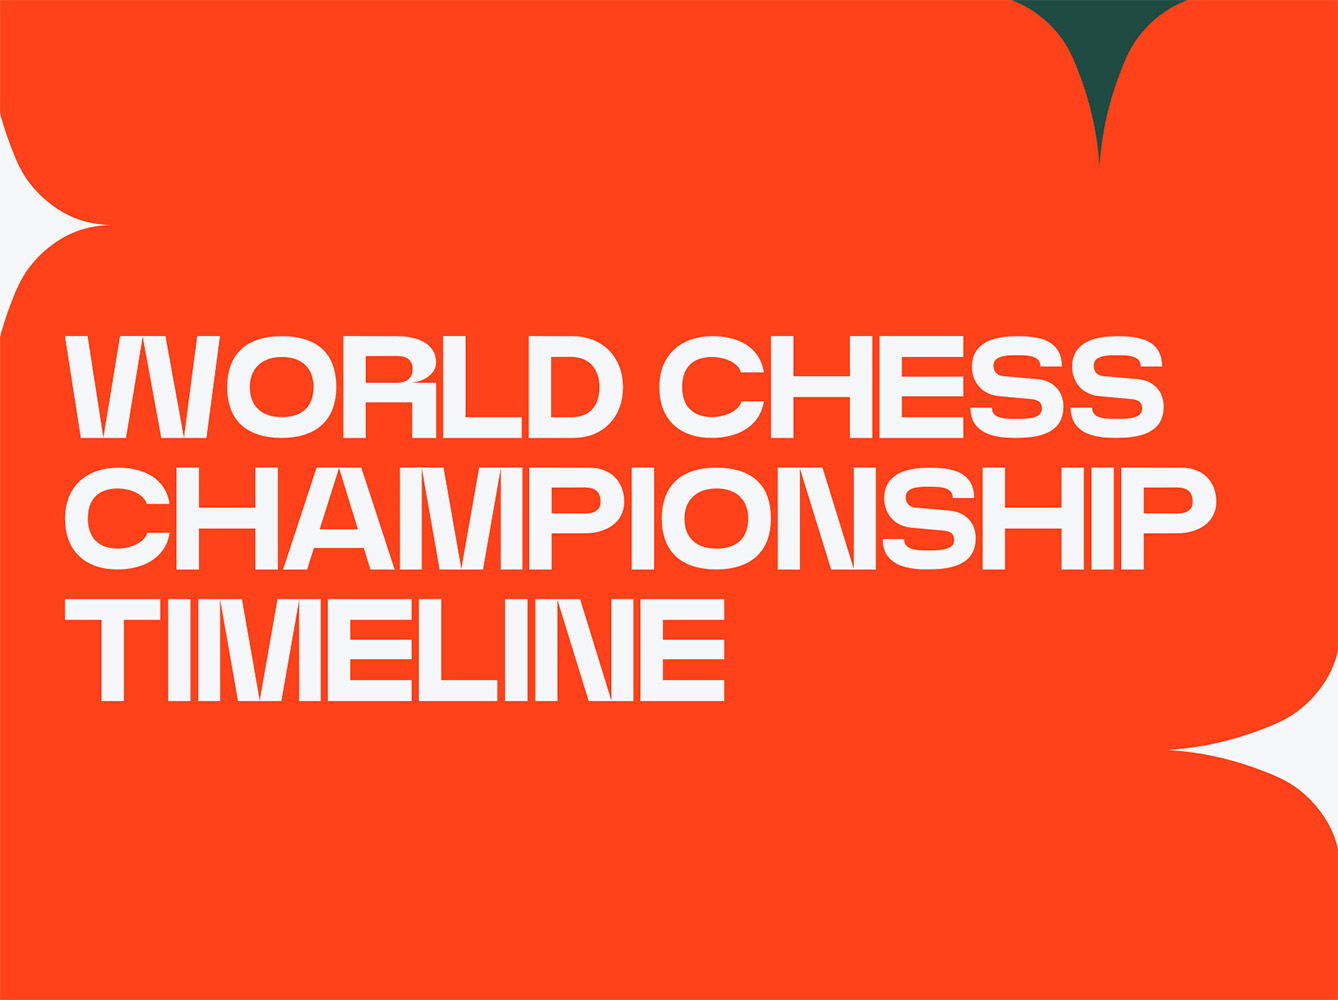 World Chess Championship Timeline